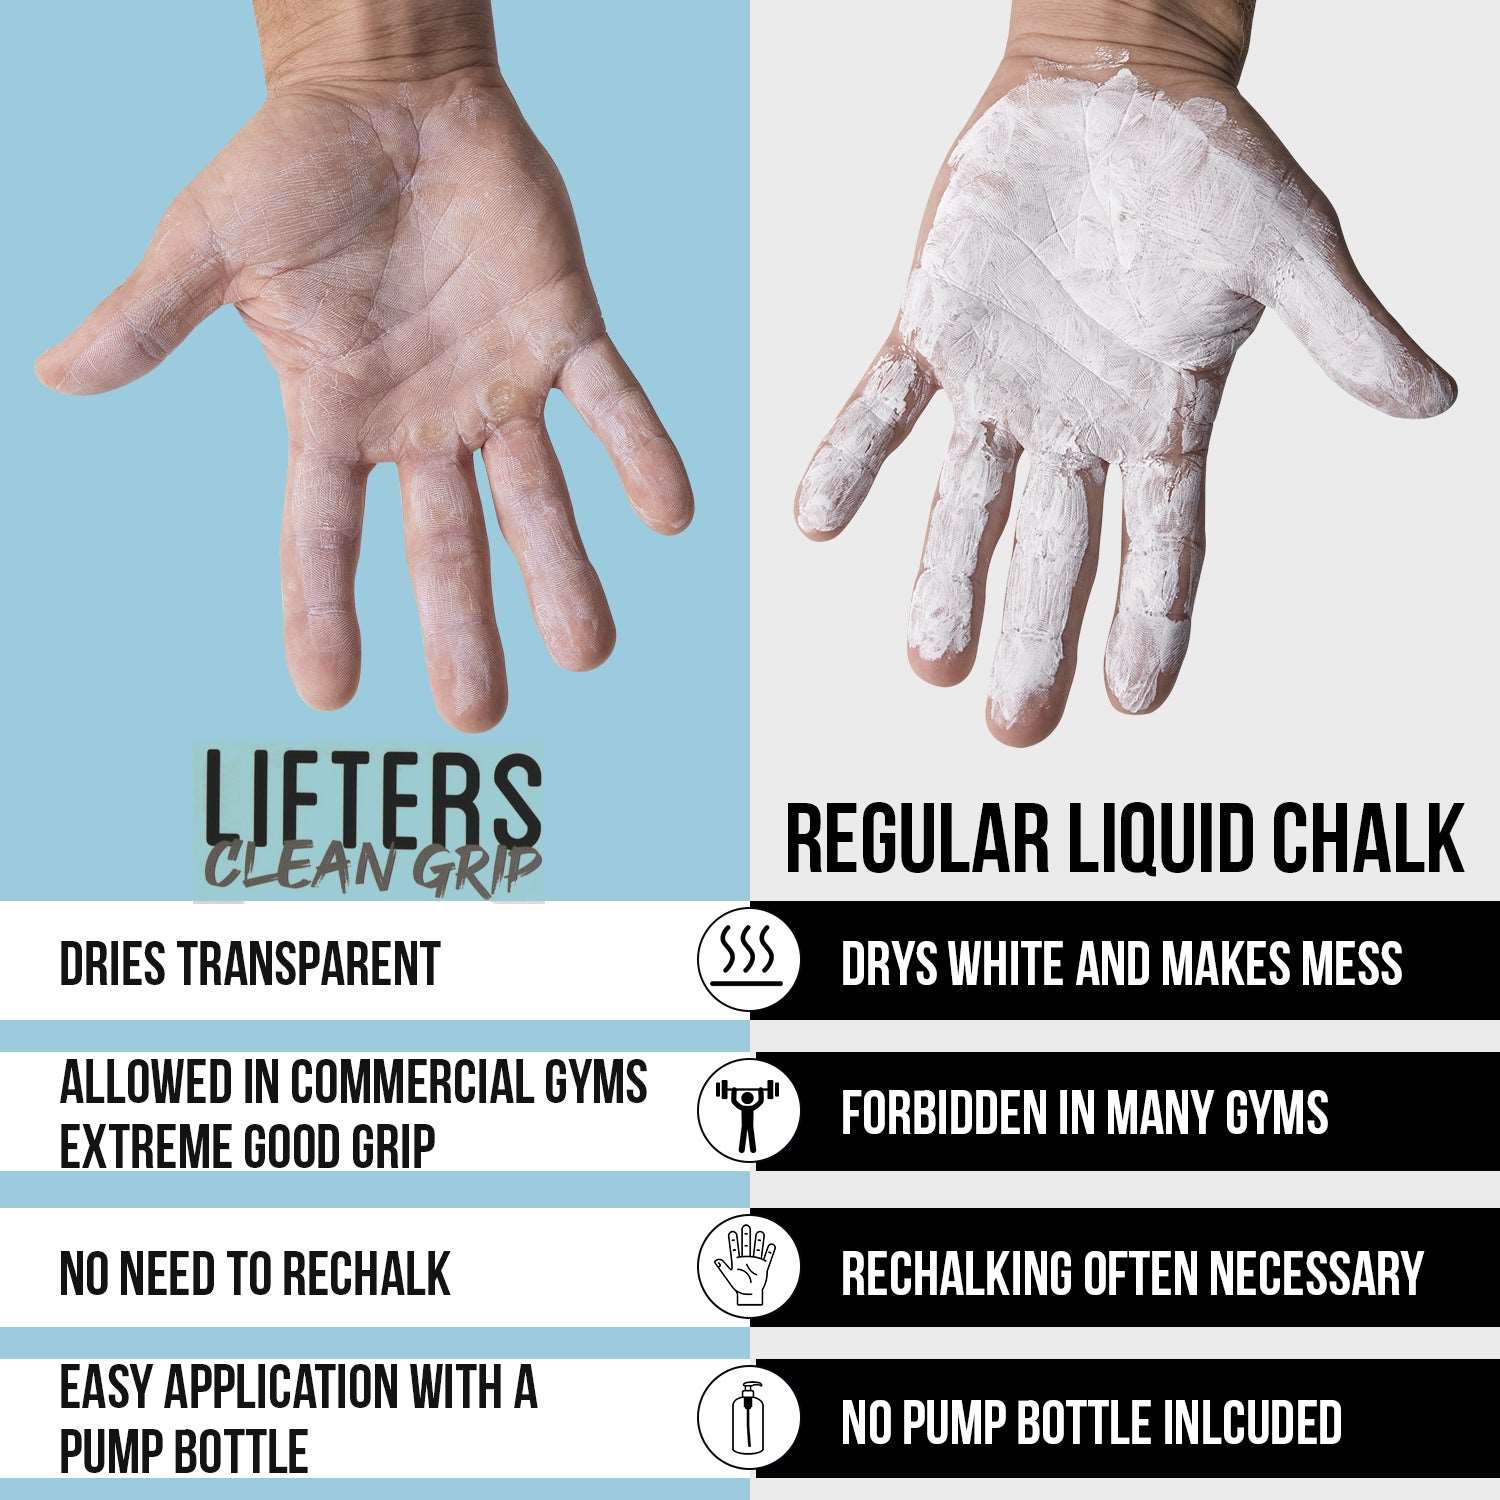 Clean Grip transparentes Liquid Chalk Vergleich von Liquid Chalk zu Clean Grip